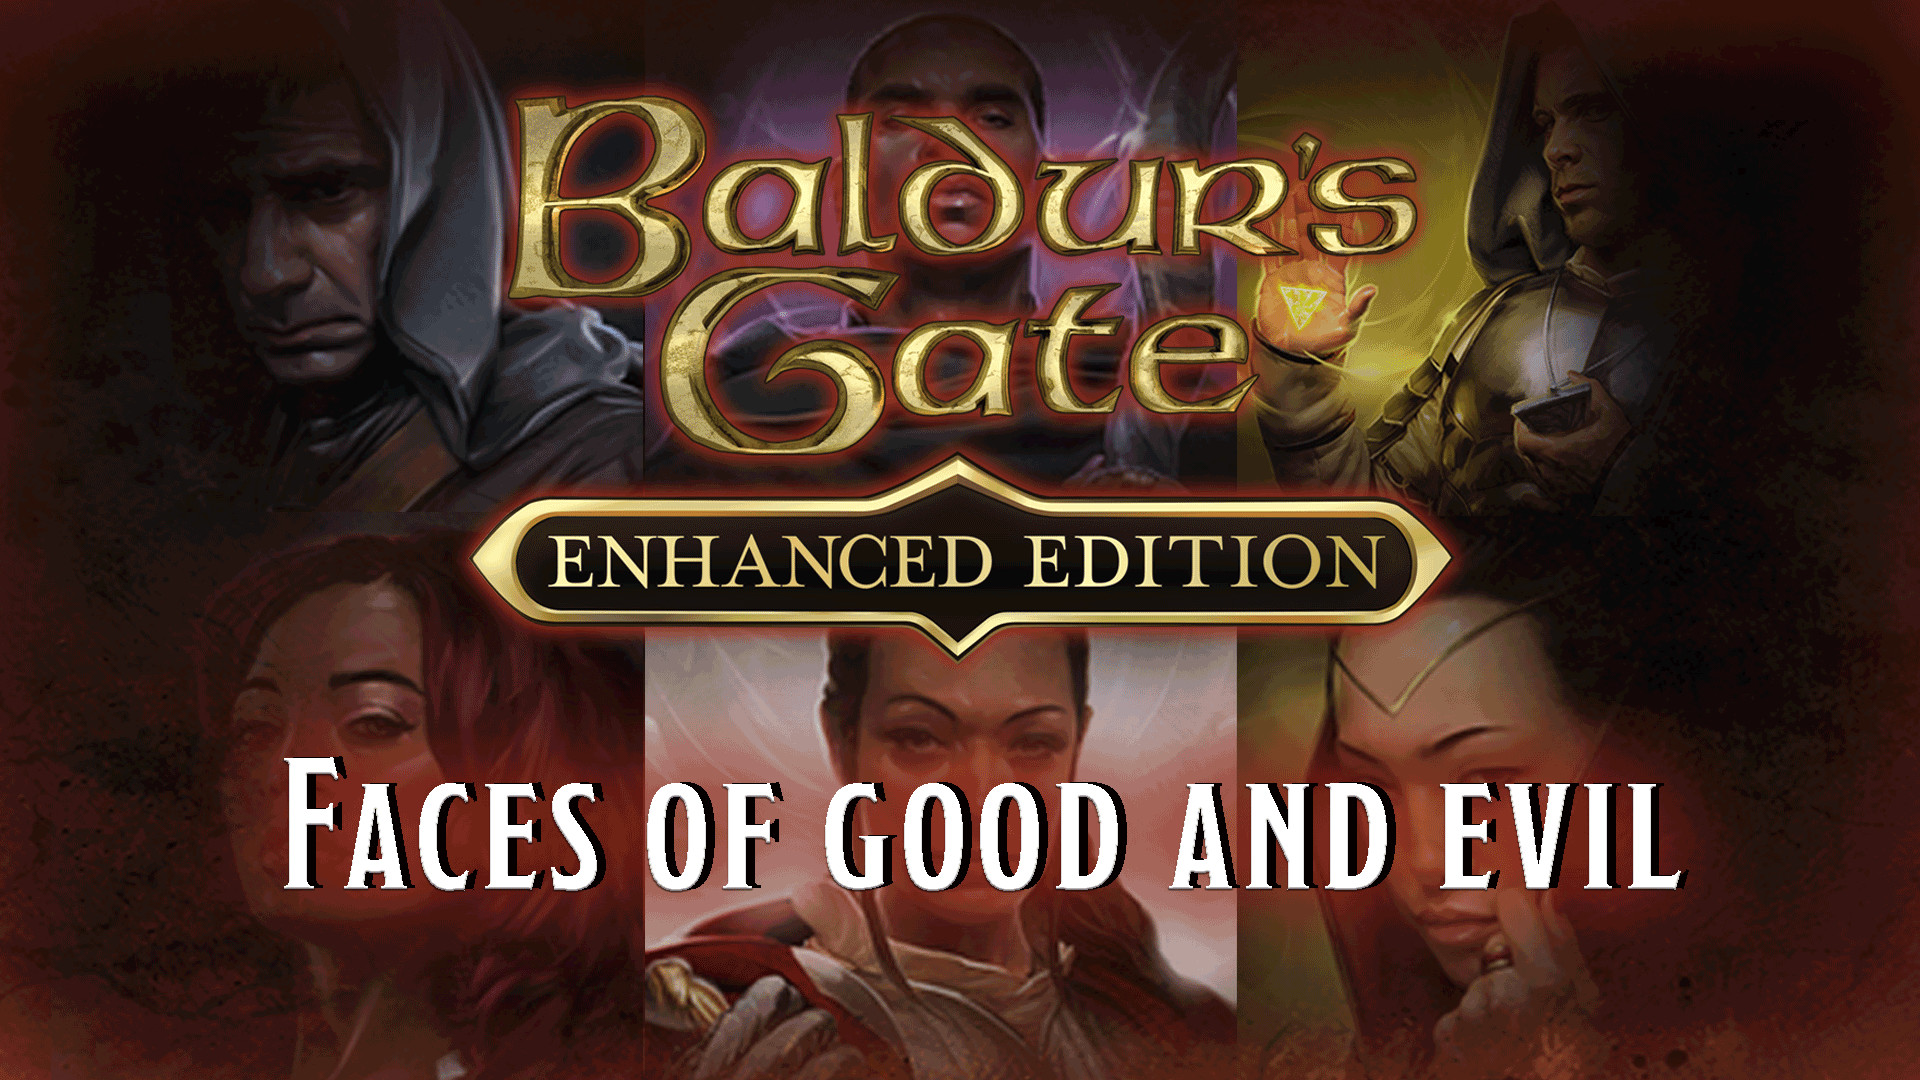 Baldur's Gate: Faces of Good and Evil Featured Screenshot #1